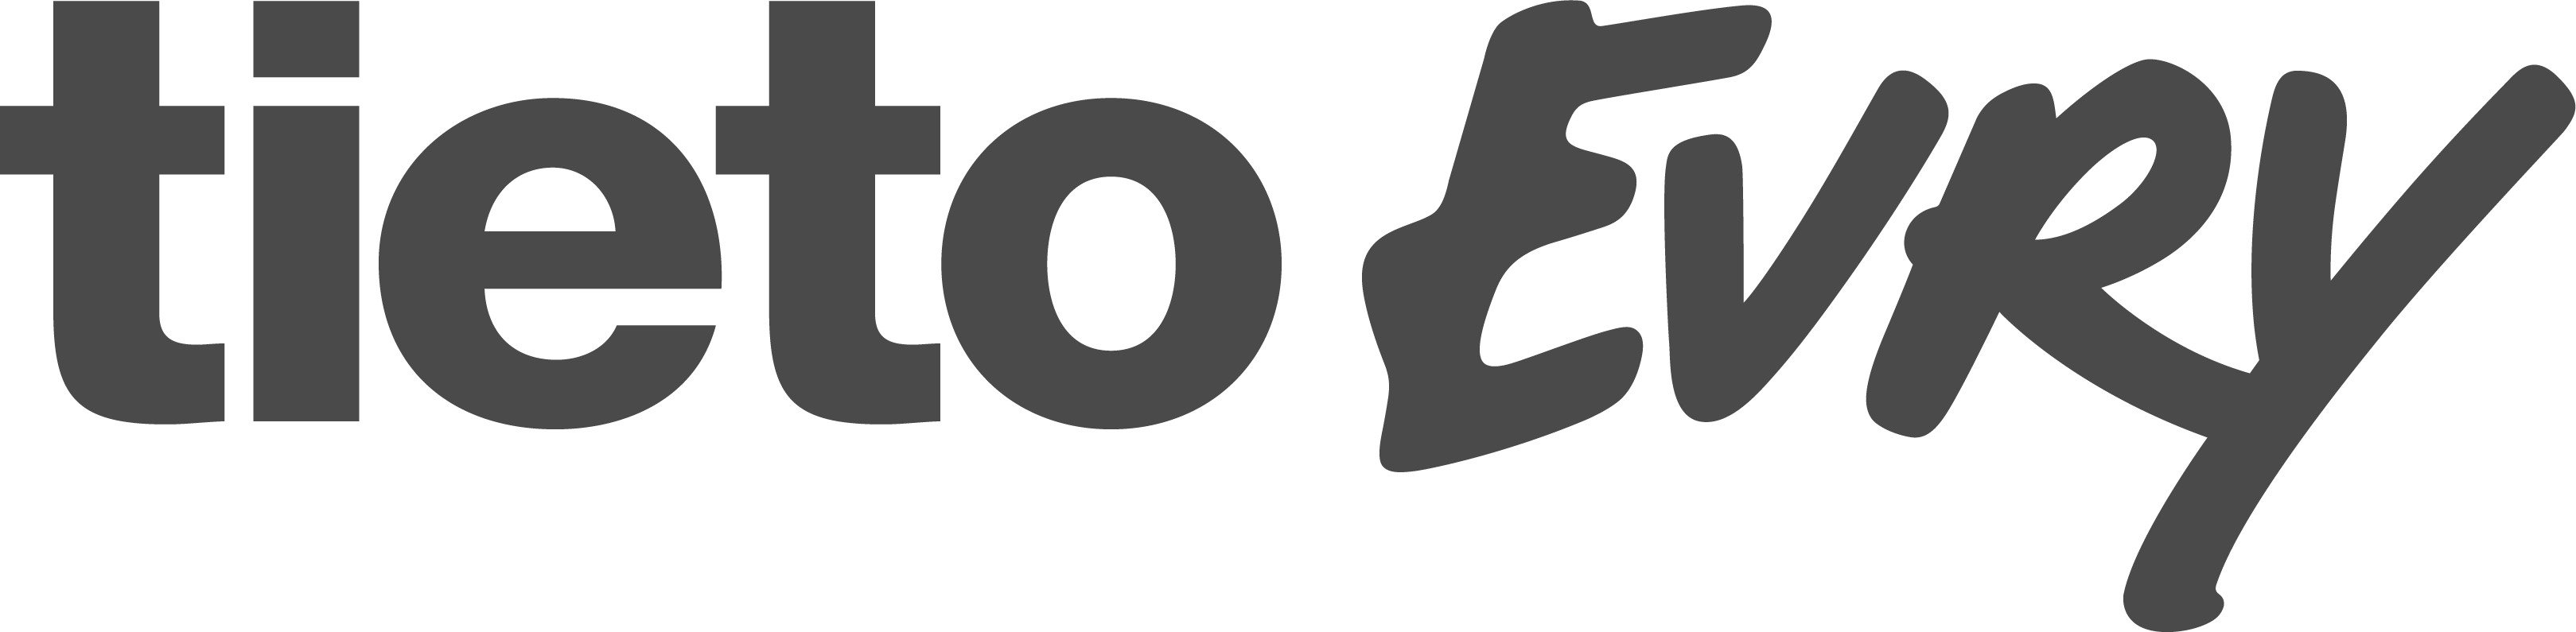 Evry logo